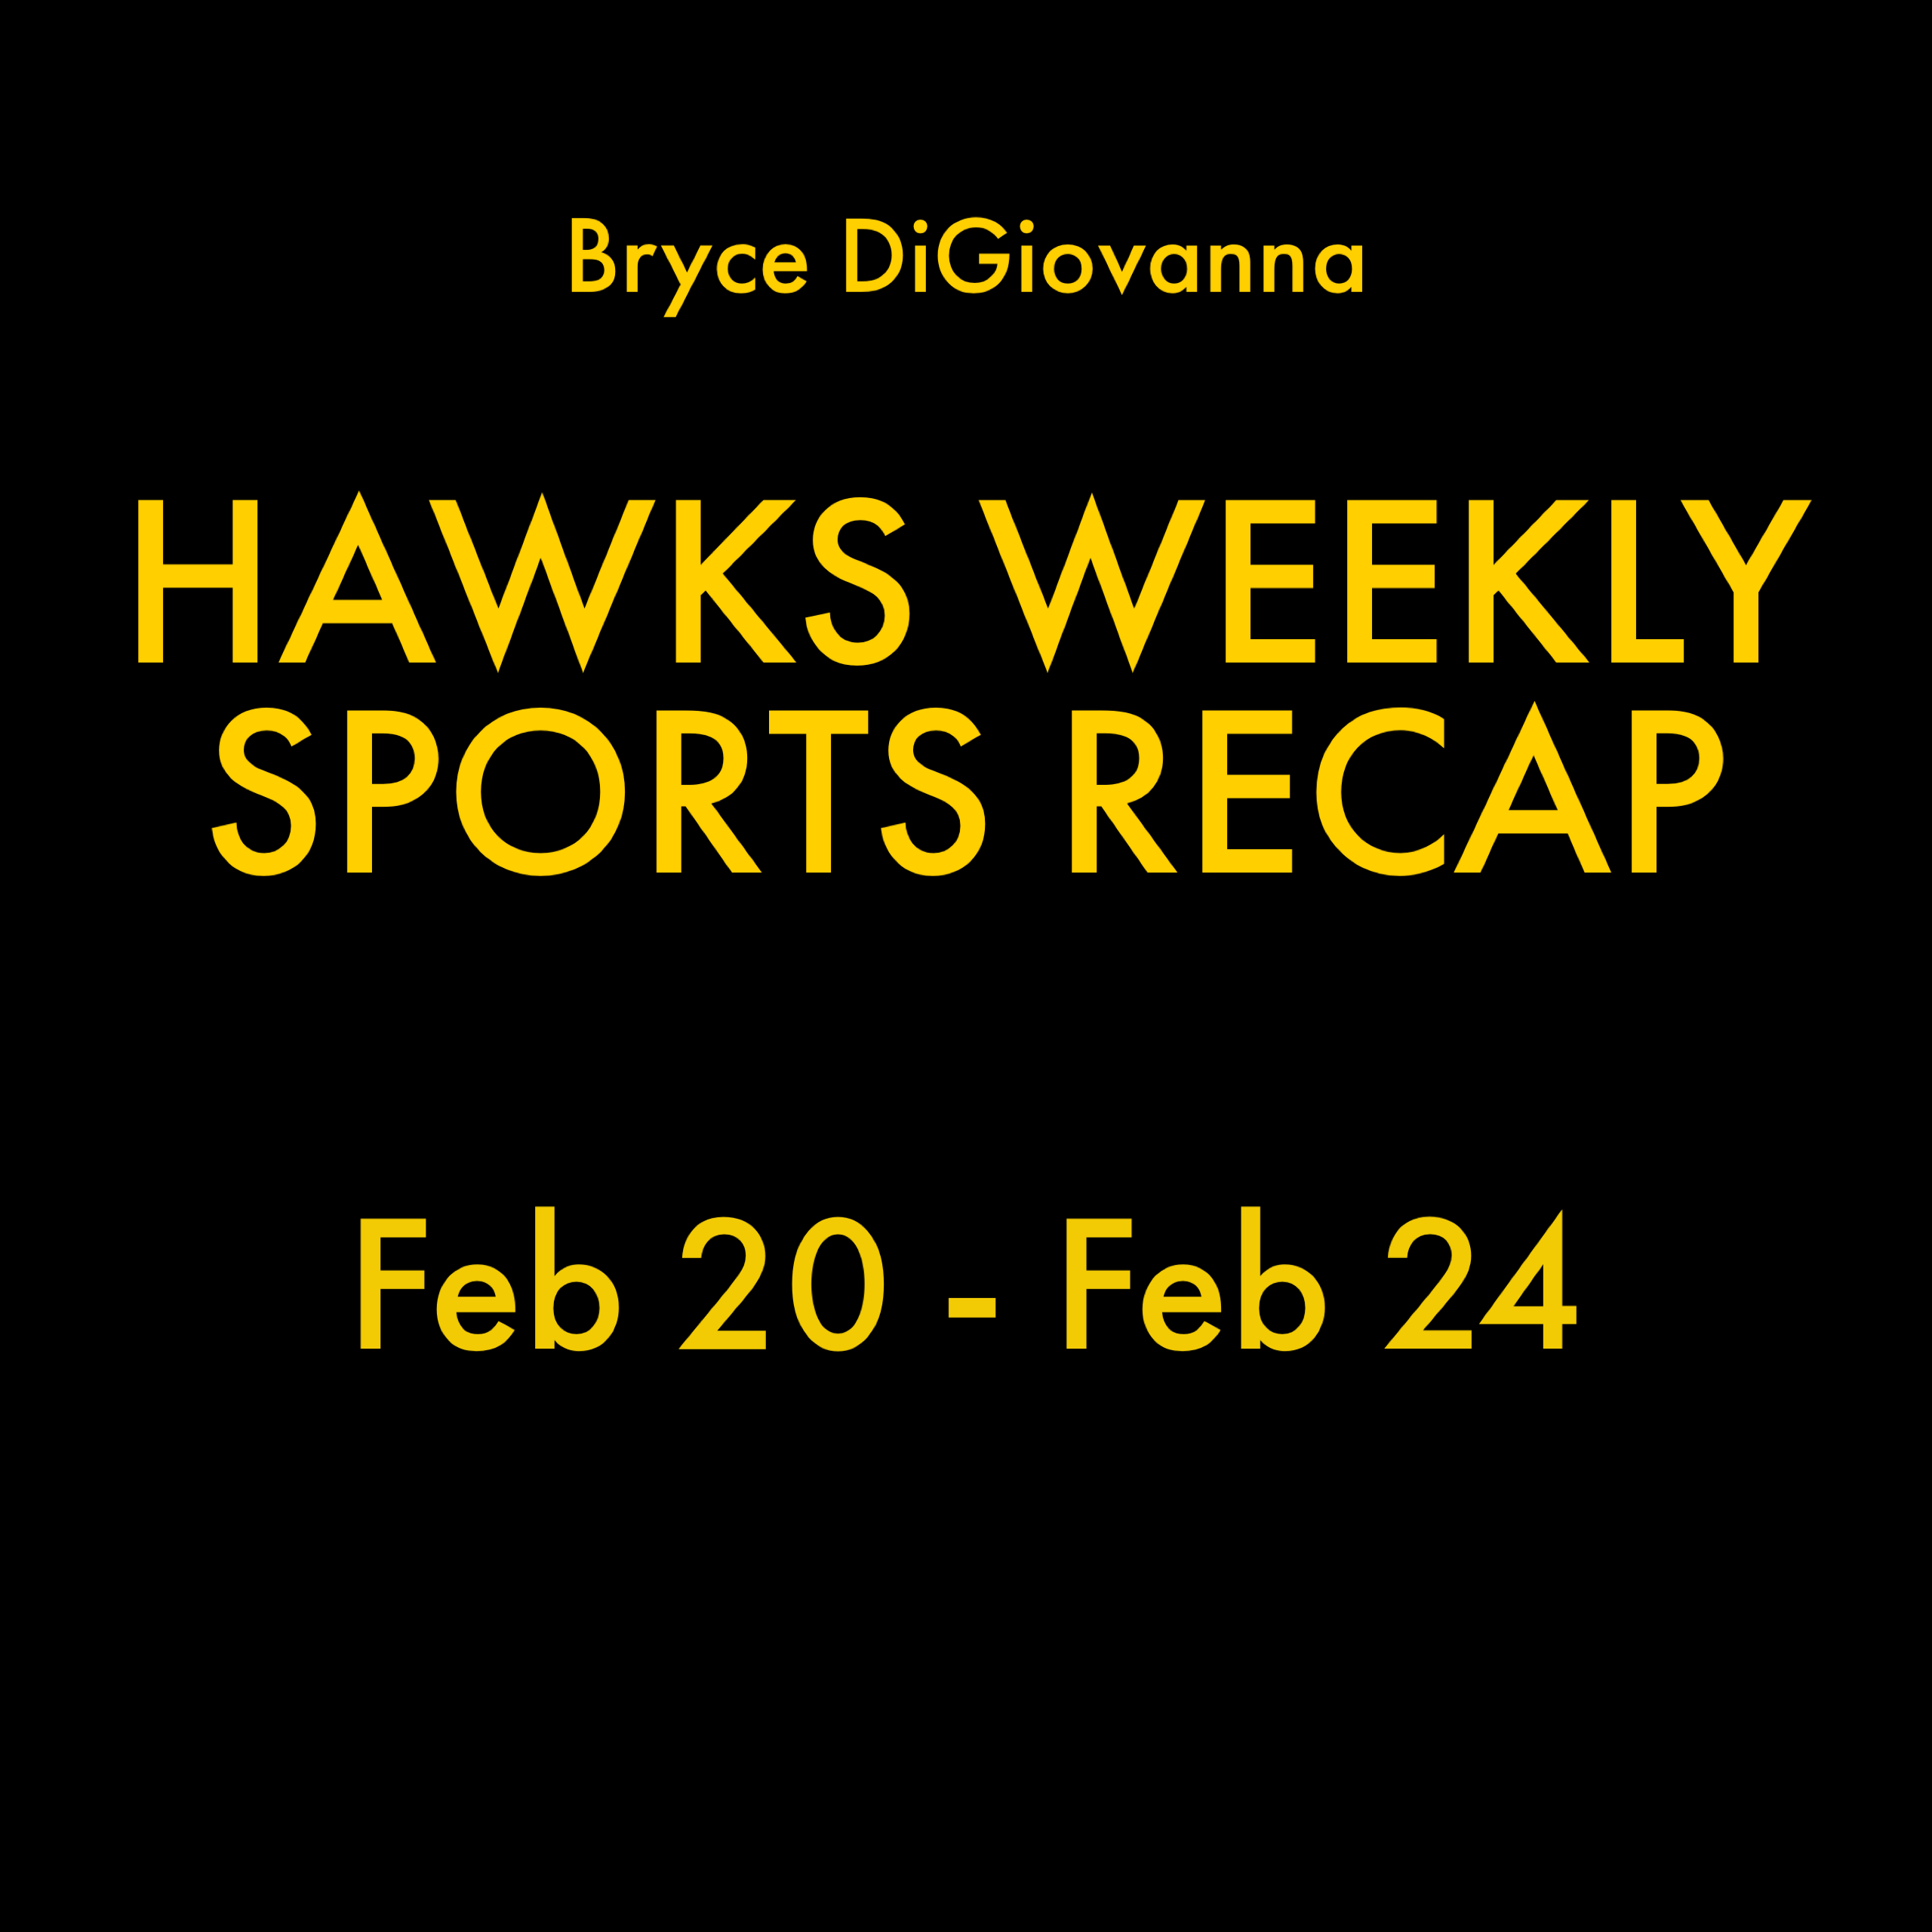 Hawks Weekly Sports Recap 2/20-2/24